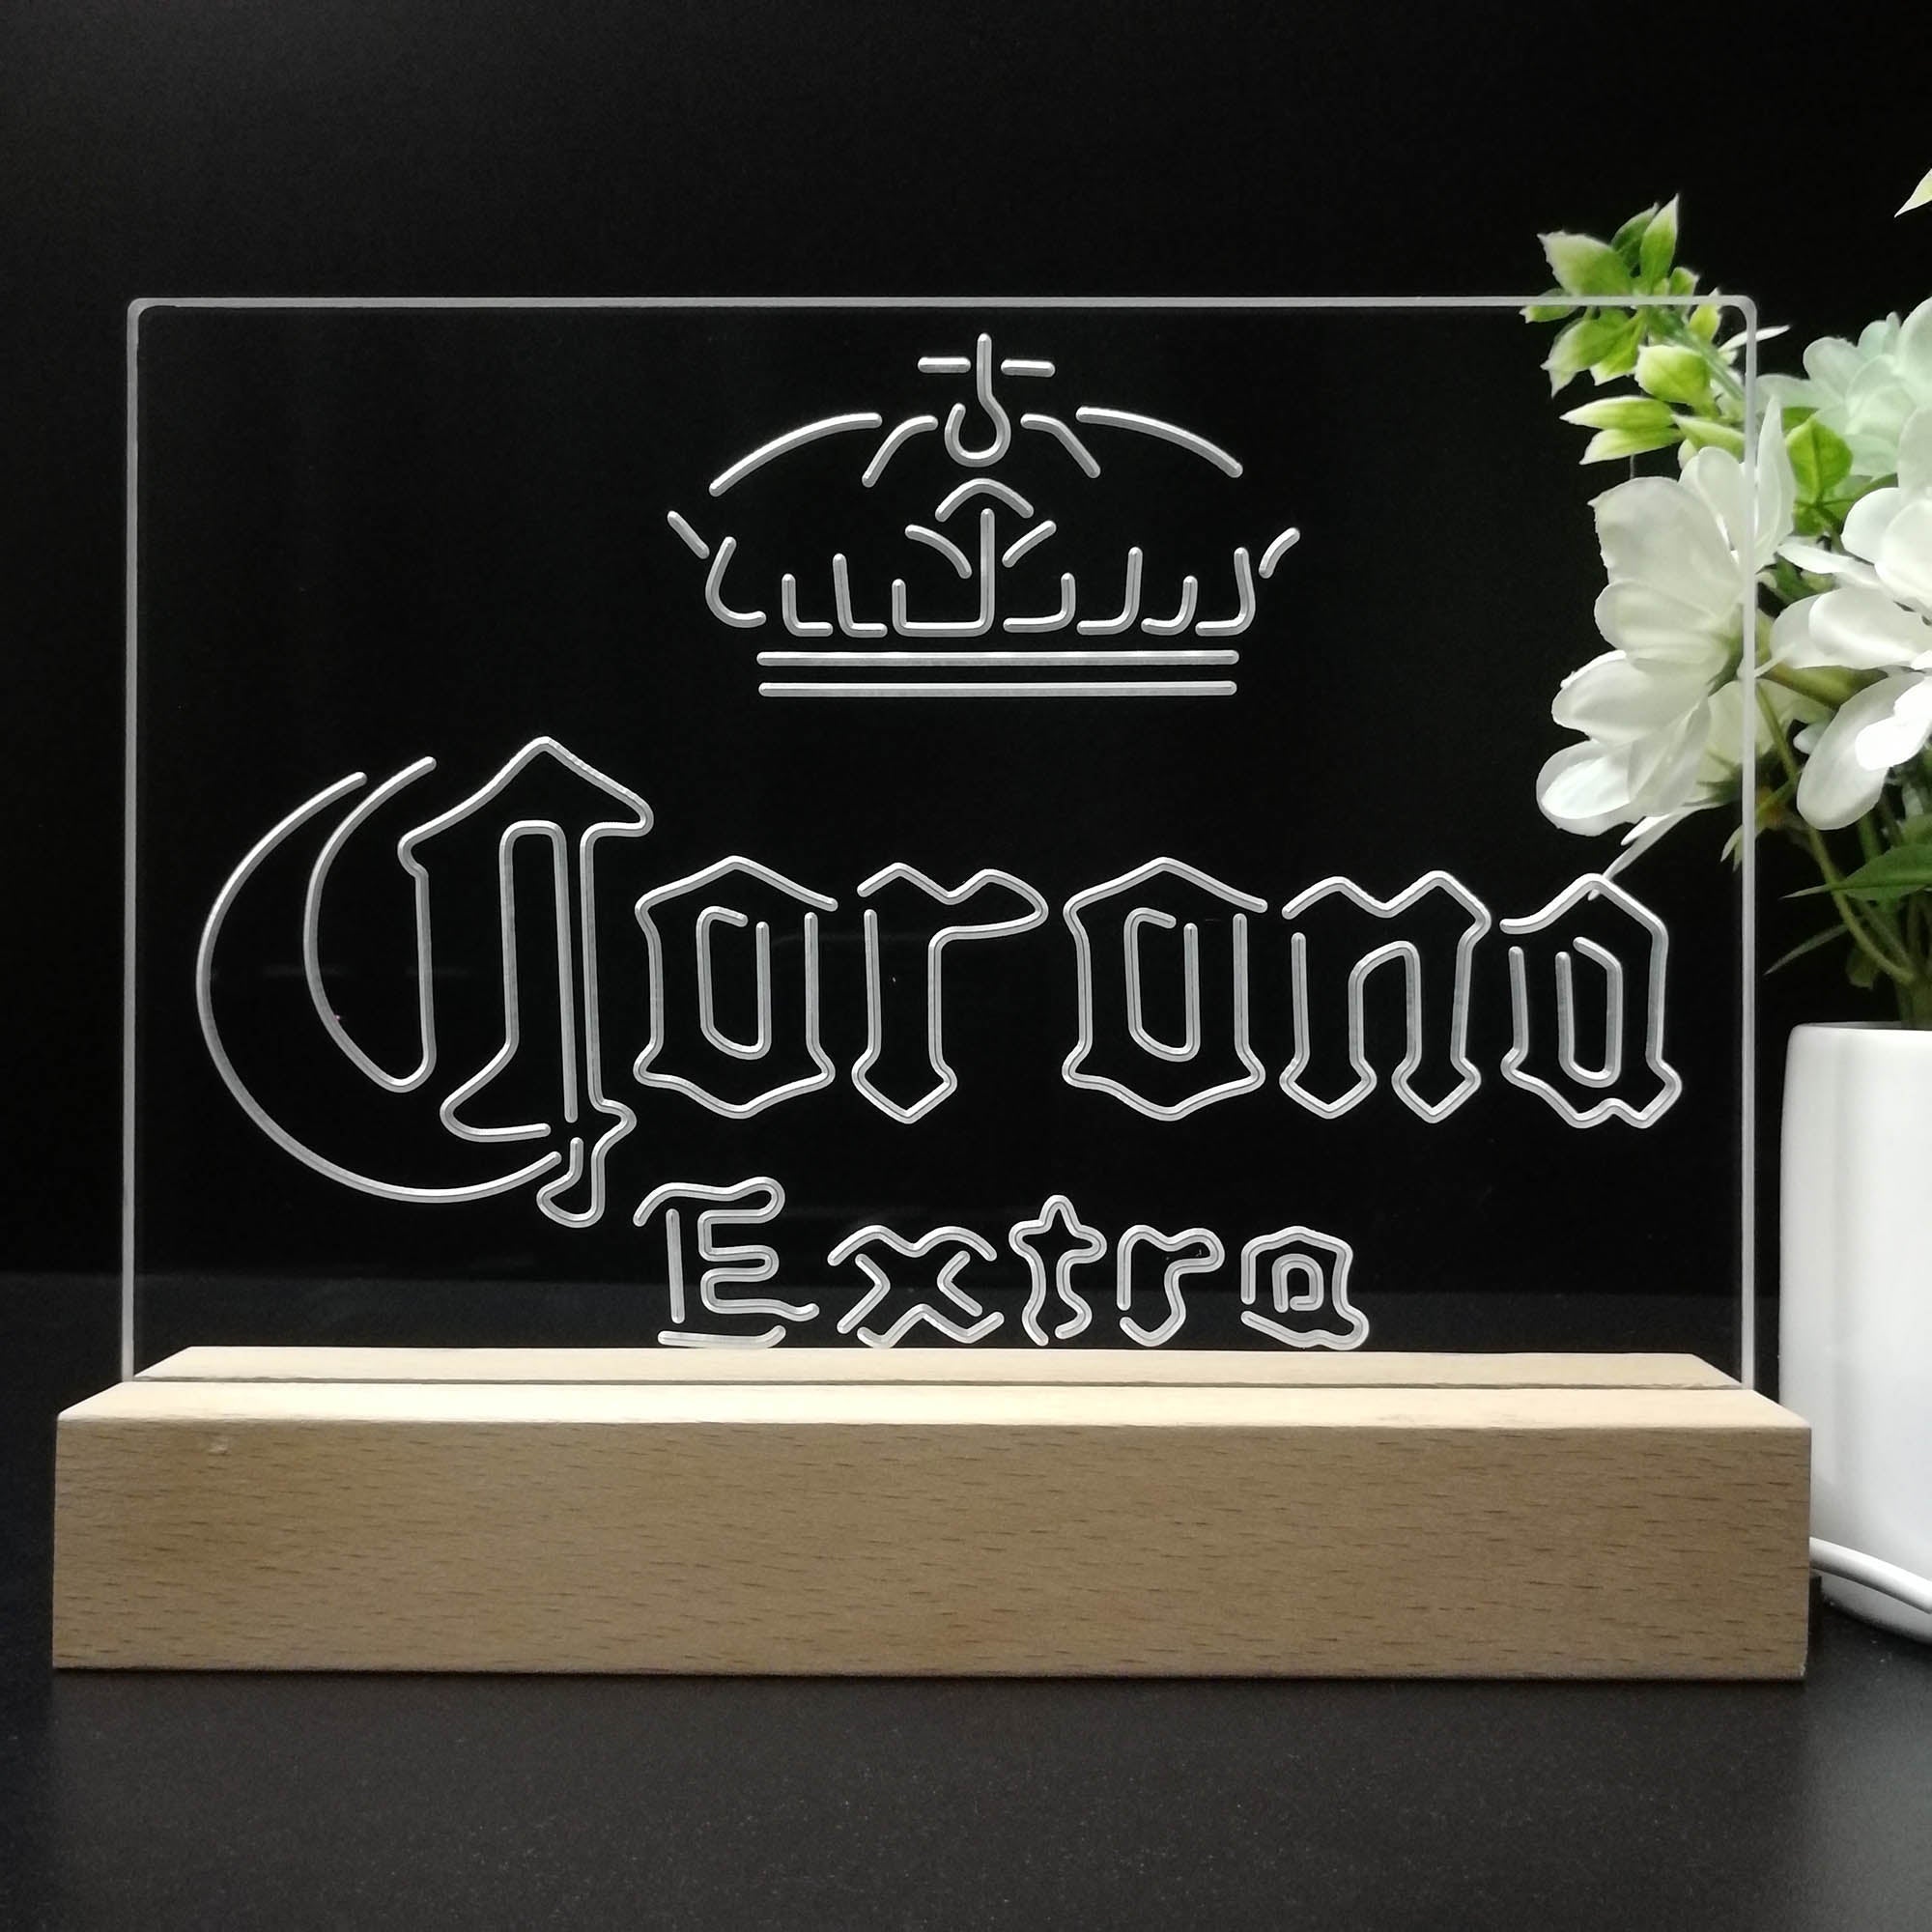 Corona Crown Extra Traditional Neon Sign Pub Bar Lamp